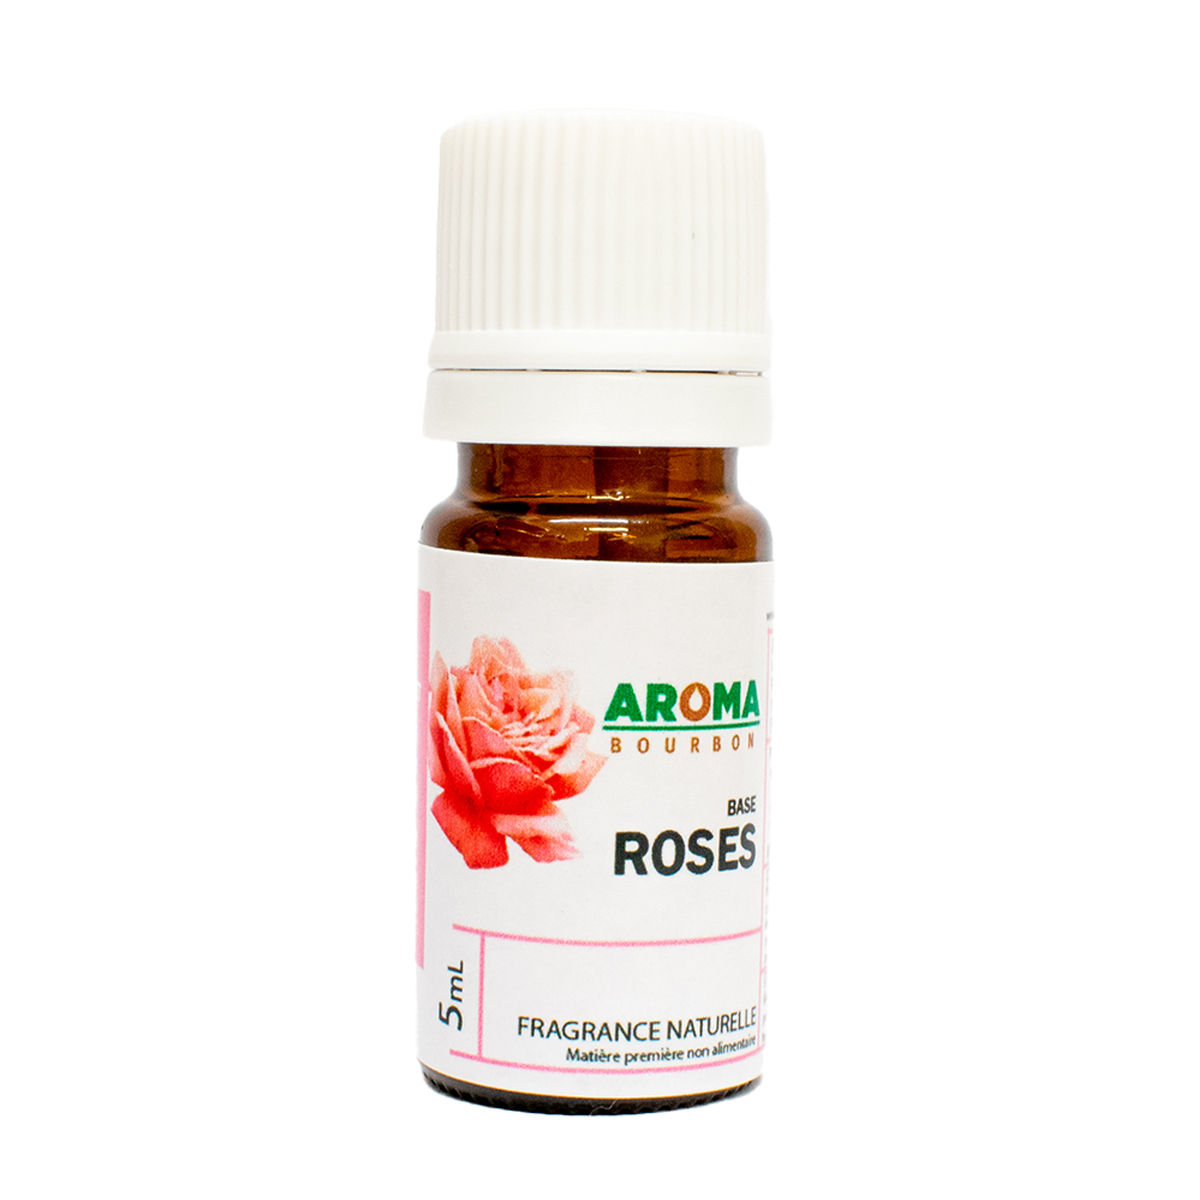 ROSE- Fragrance naturelle